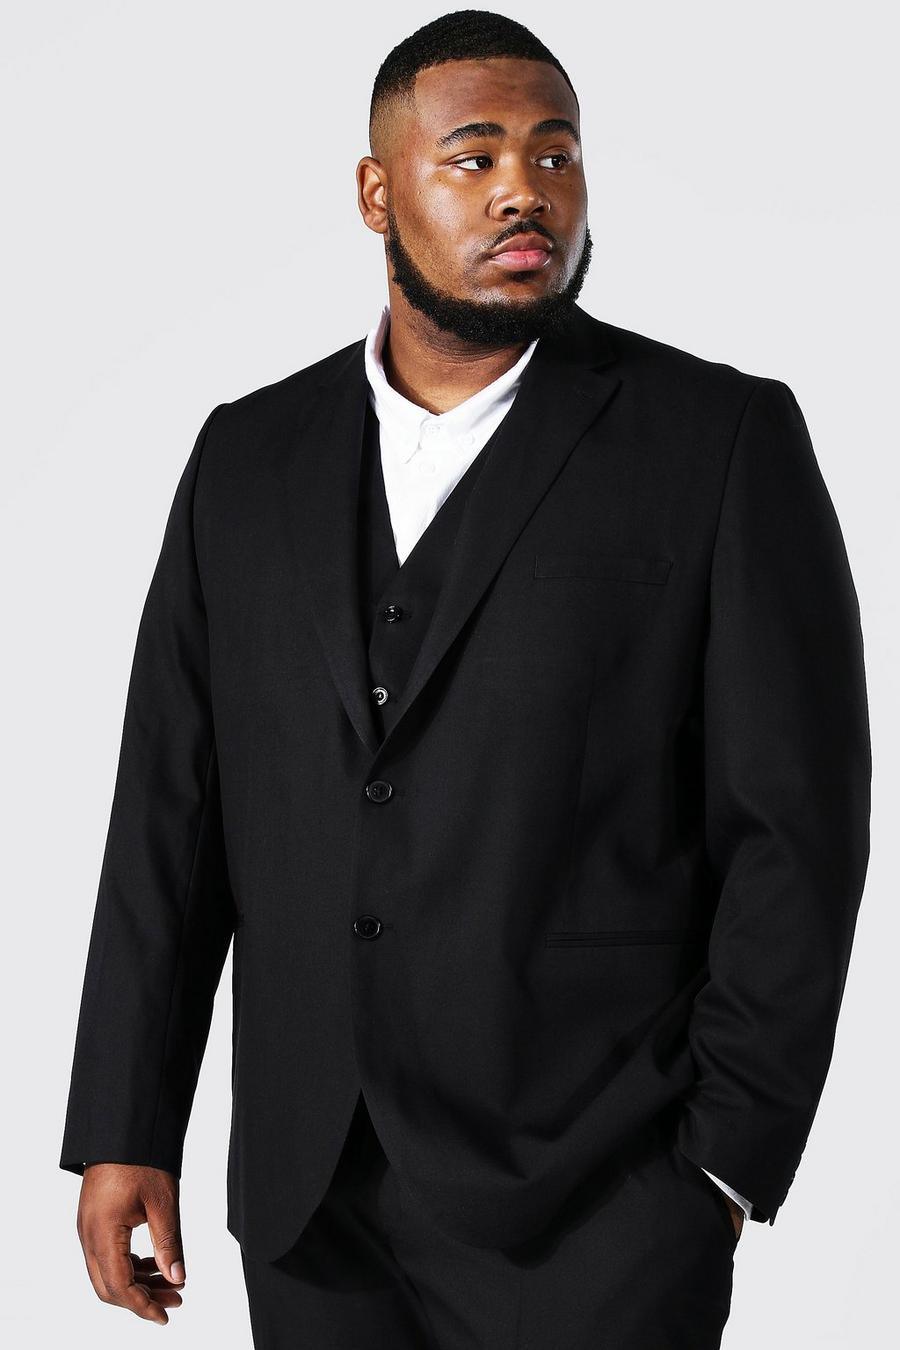 https://media.boohoo.com/i/boohoo/mzz88939_black_xl/male-black-plus-size-slim-single-breasted-suit-jacket/?w=900&qlt=default&fmt.jp2.qlt=70&fmt=auto&sm=fit